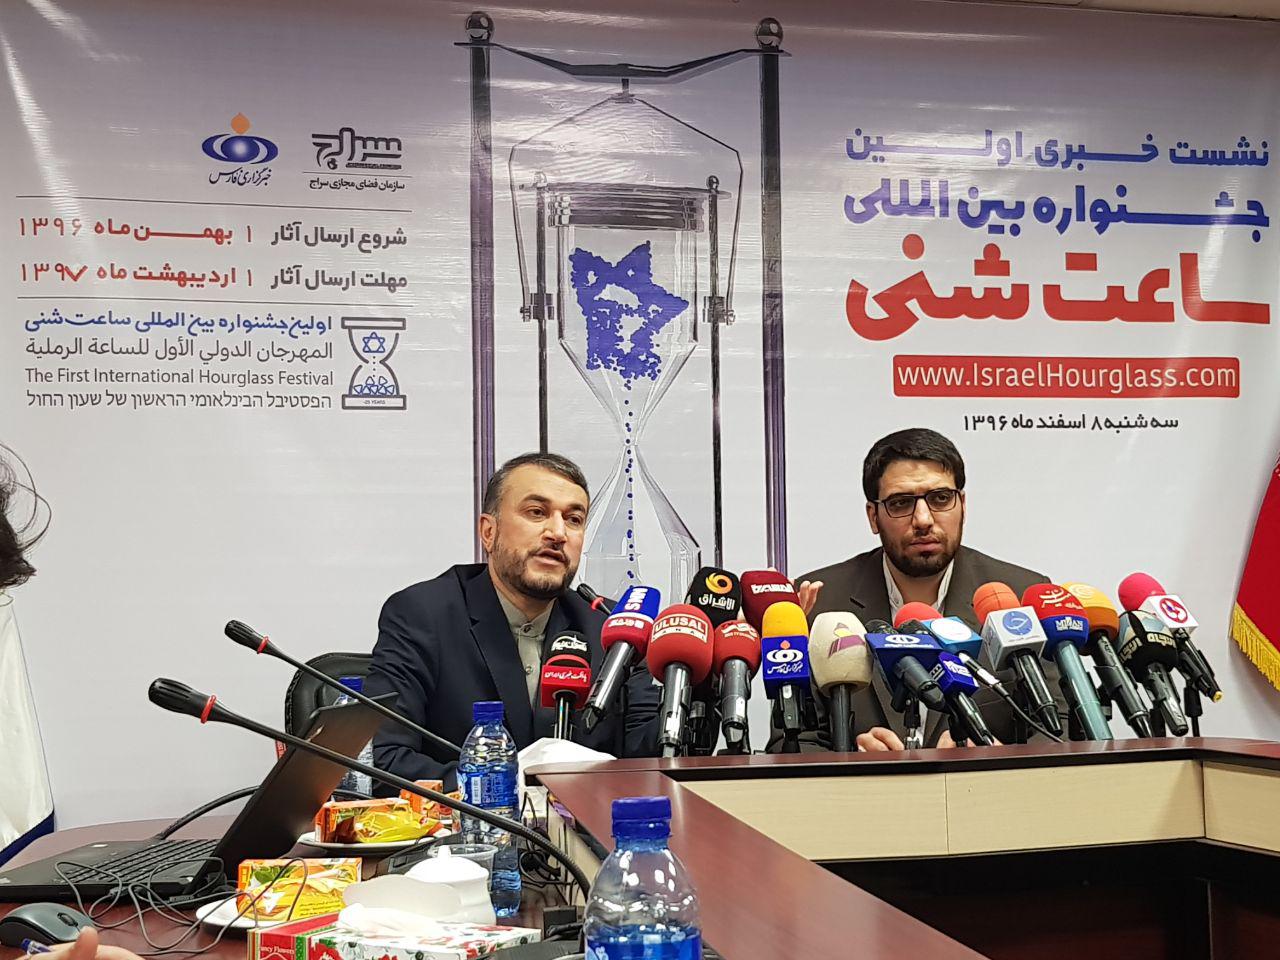 Iran to Hold International “Israel Hourglass” Festival